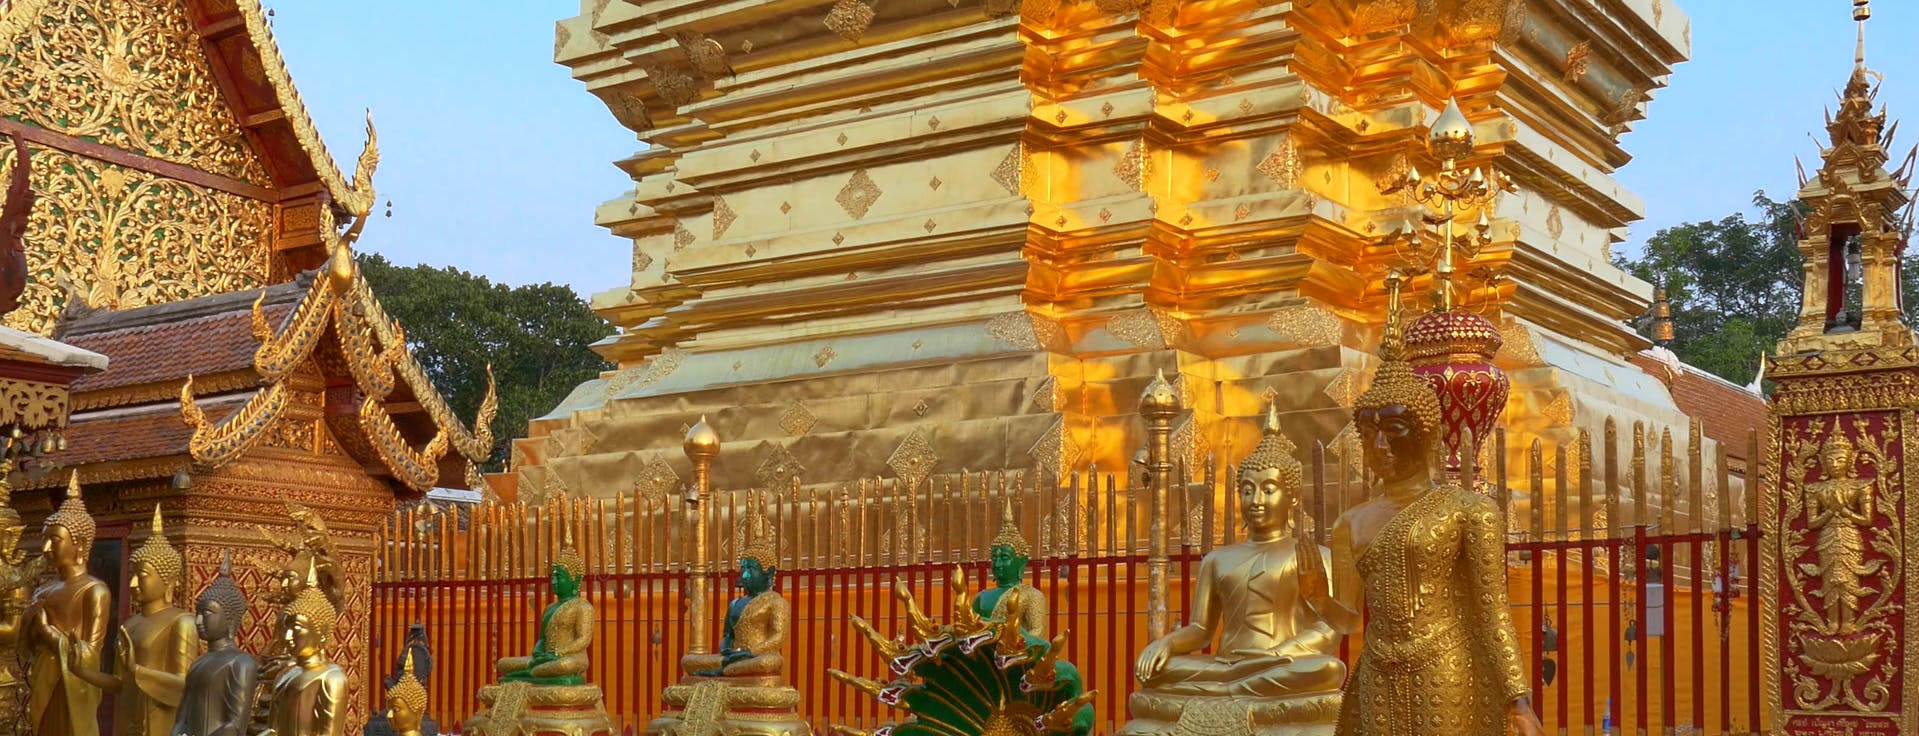 Wat Palad Chiang Mai Temple Doi Suthep 2